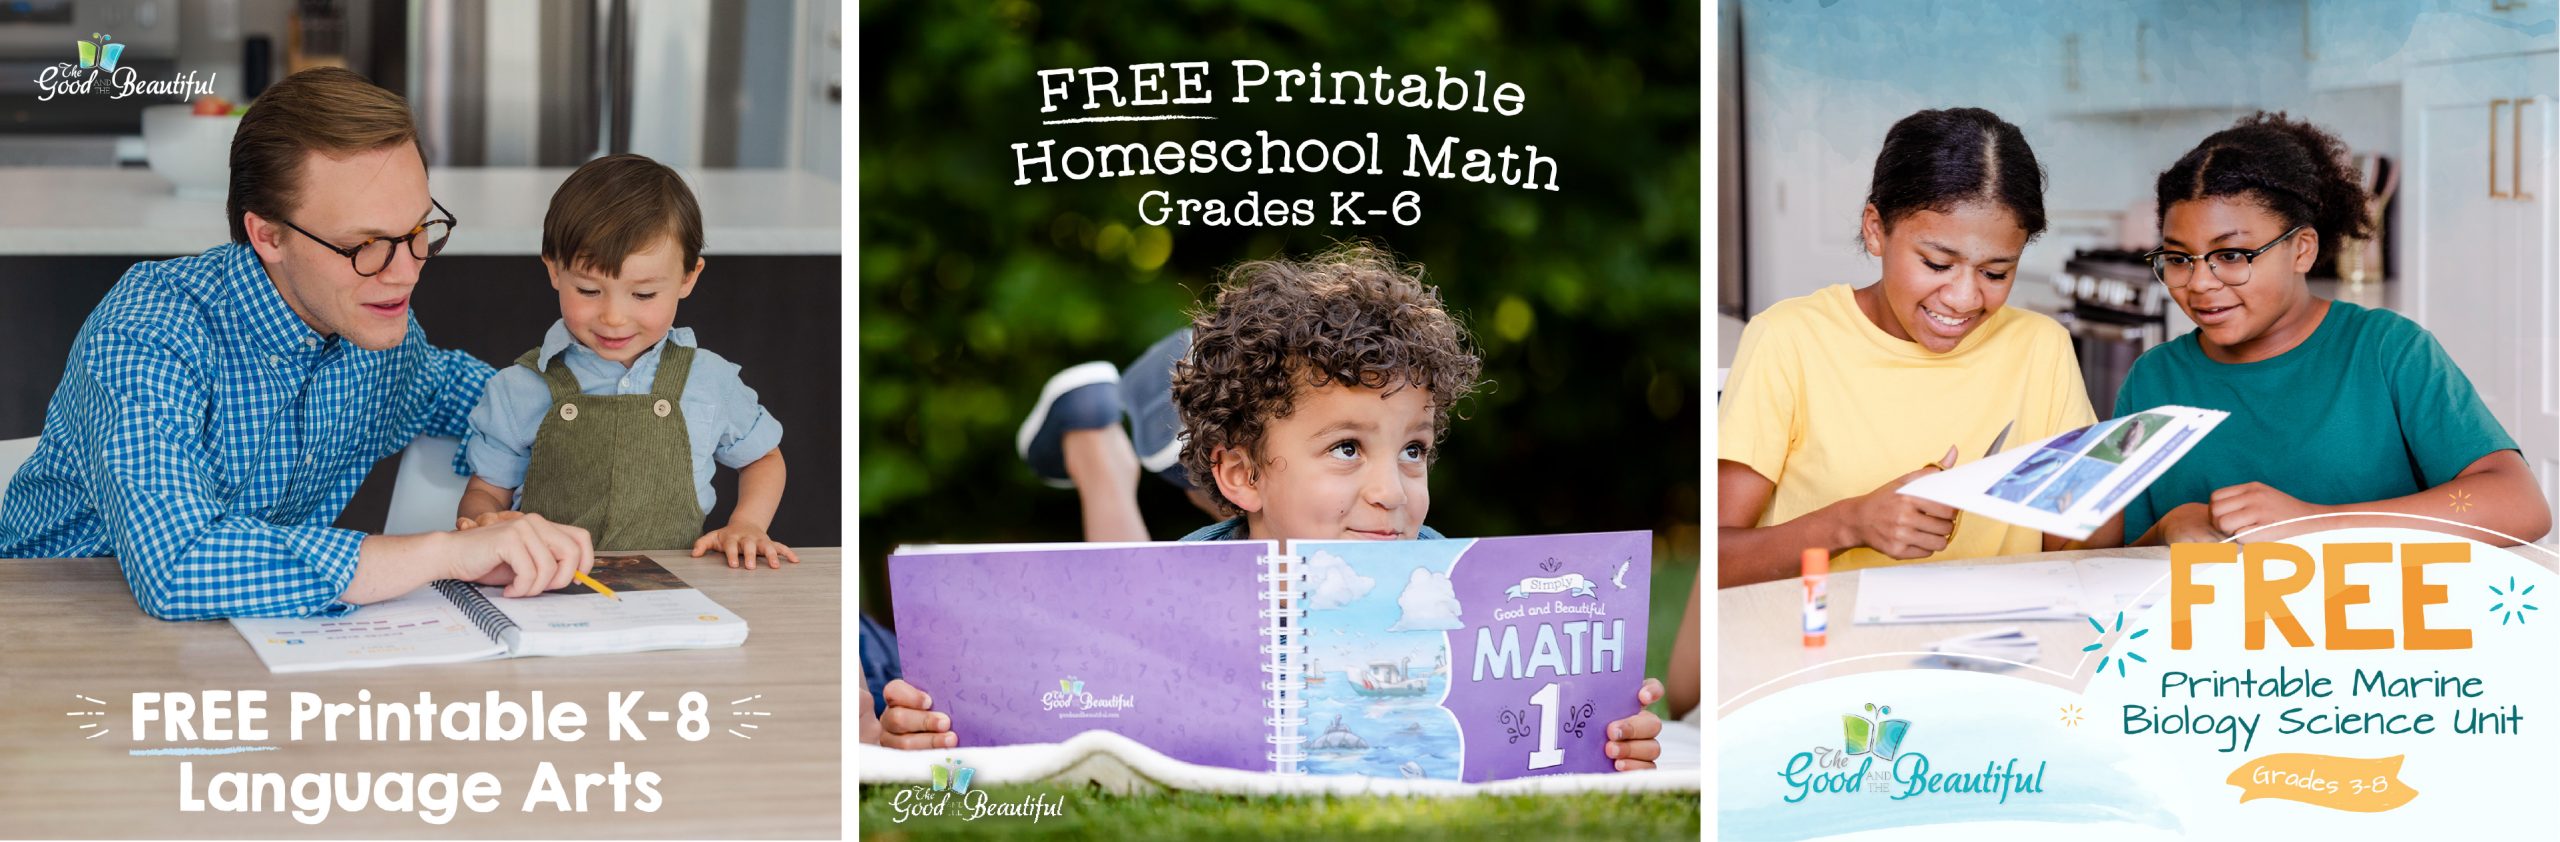 FREE Printable Homeschool Math 3 Yo T 6 Printable Marine % BiO!OY Science Unit - ! gSf;, Beaadiful 